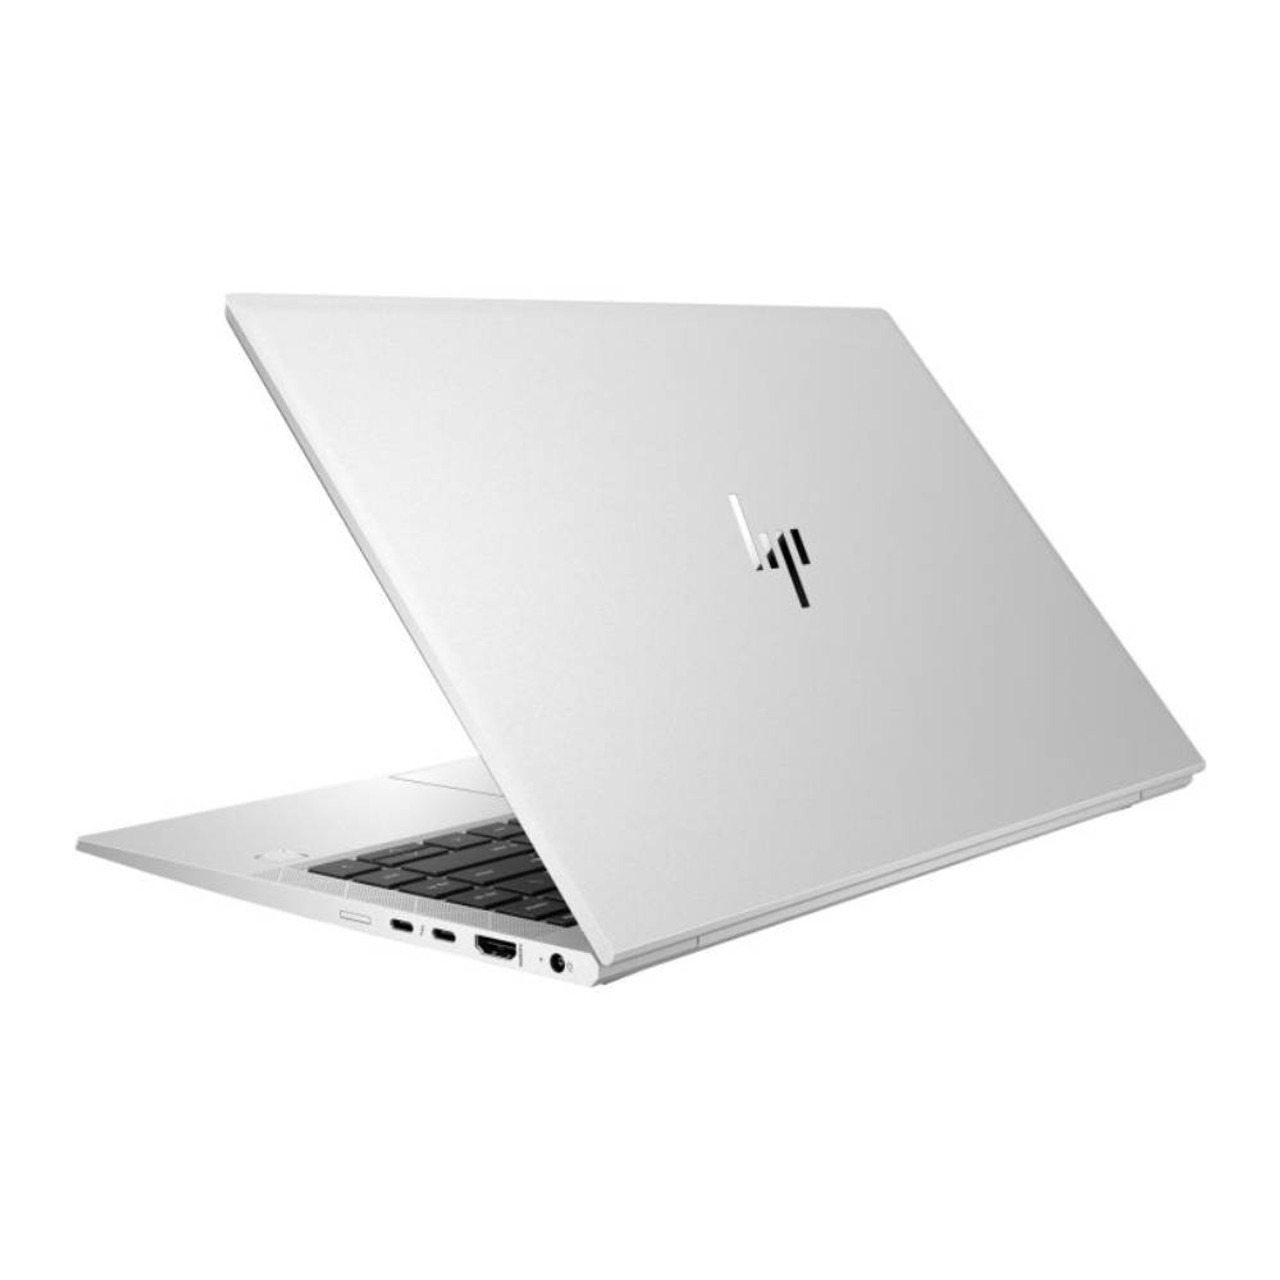 HP Elitebook 840 G7 14" Laptop Intel Core i5 1.60 GHz 8 GB 256 GB SSD W10P | Refurbished